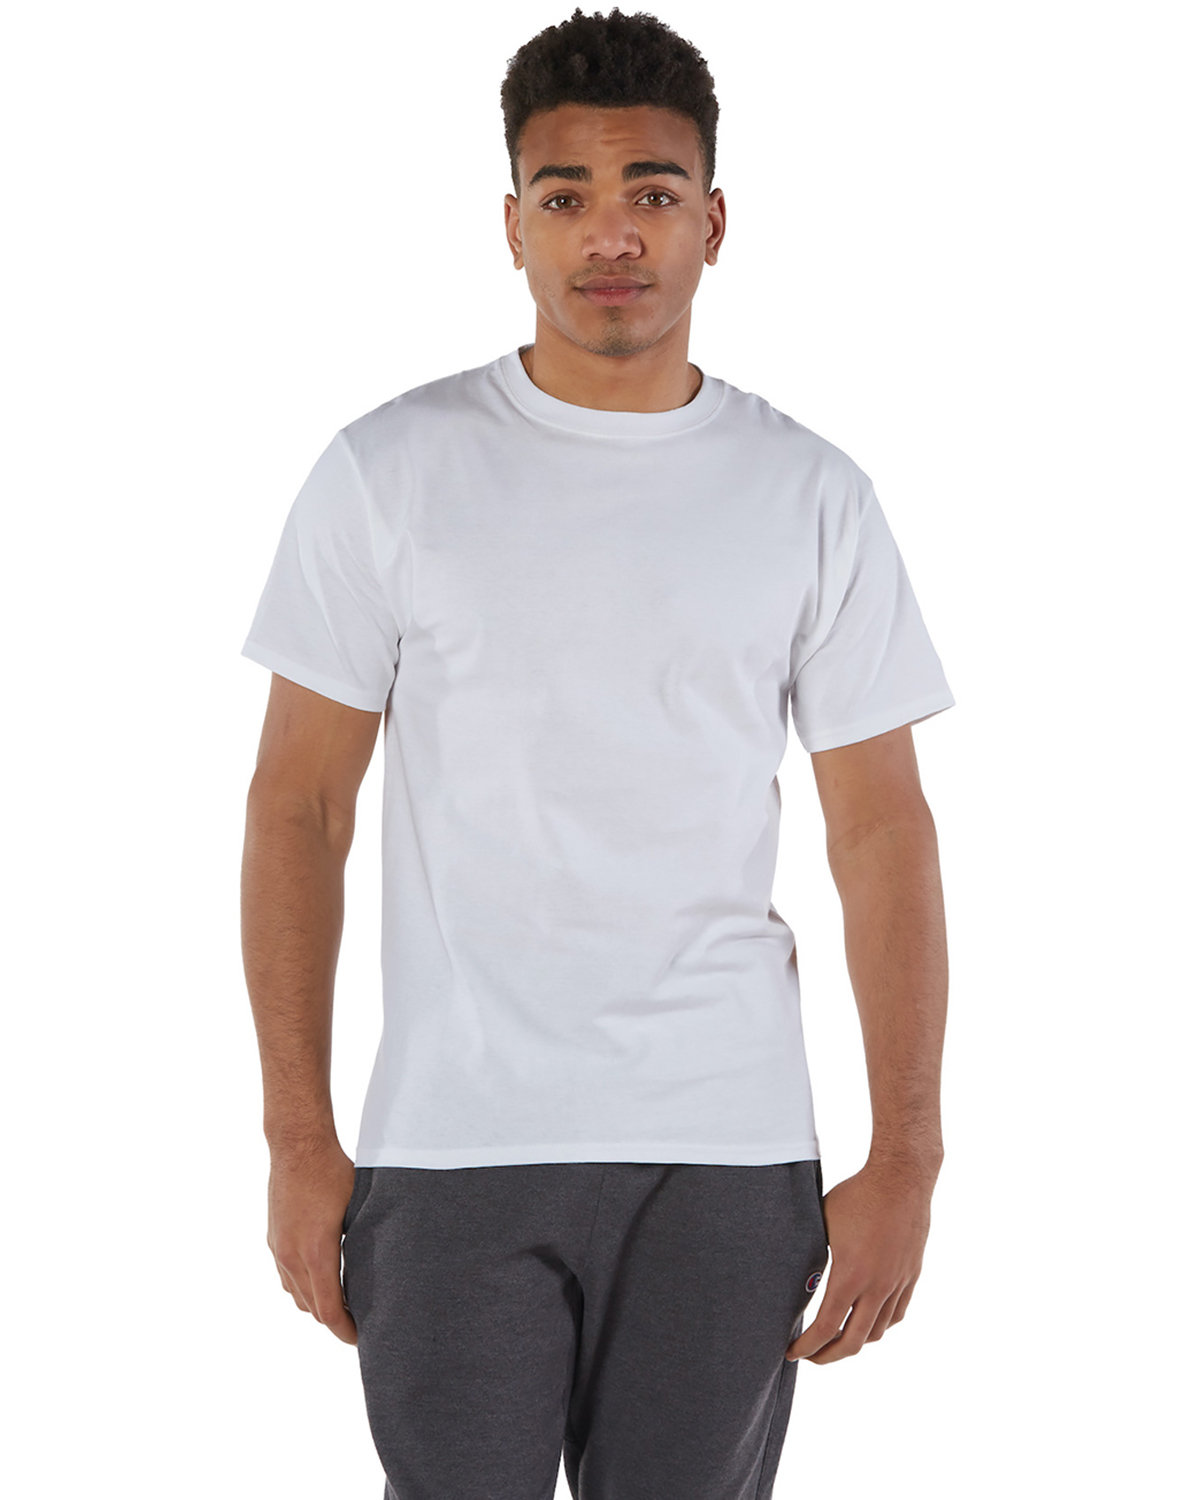 Champion Adult 6 oz. Short-Sleeve T-Shirt WHITE 